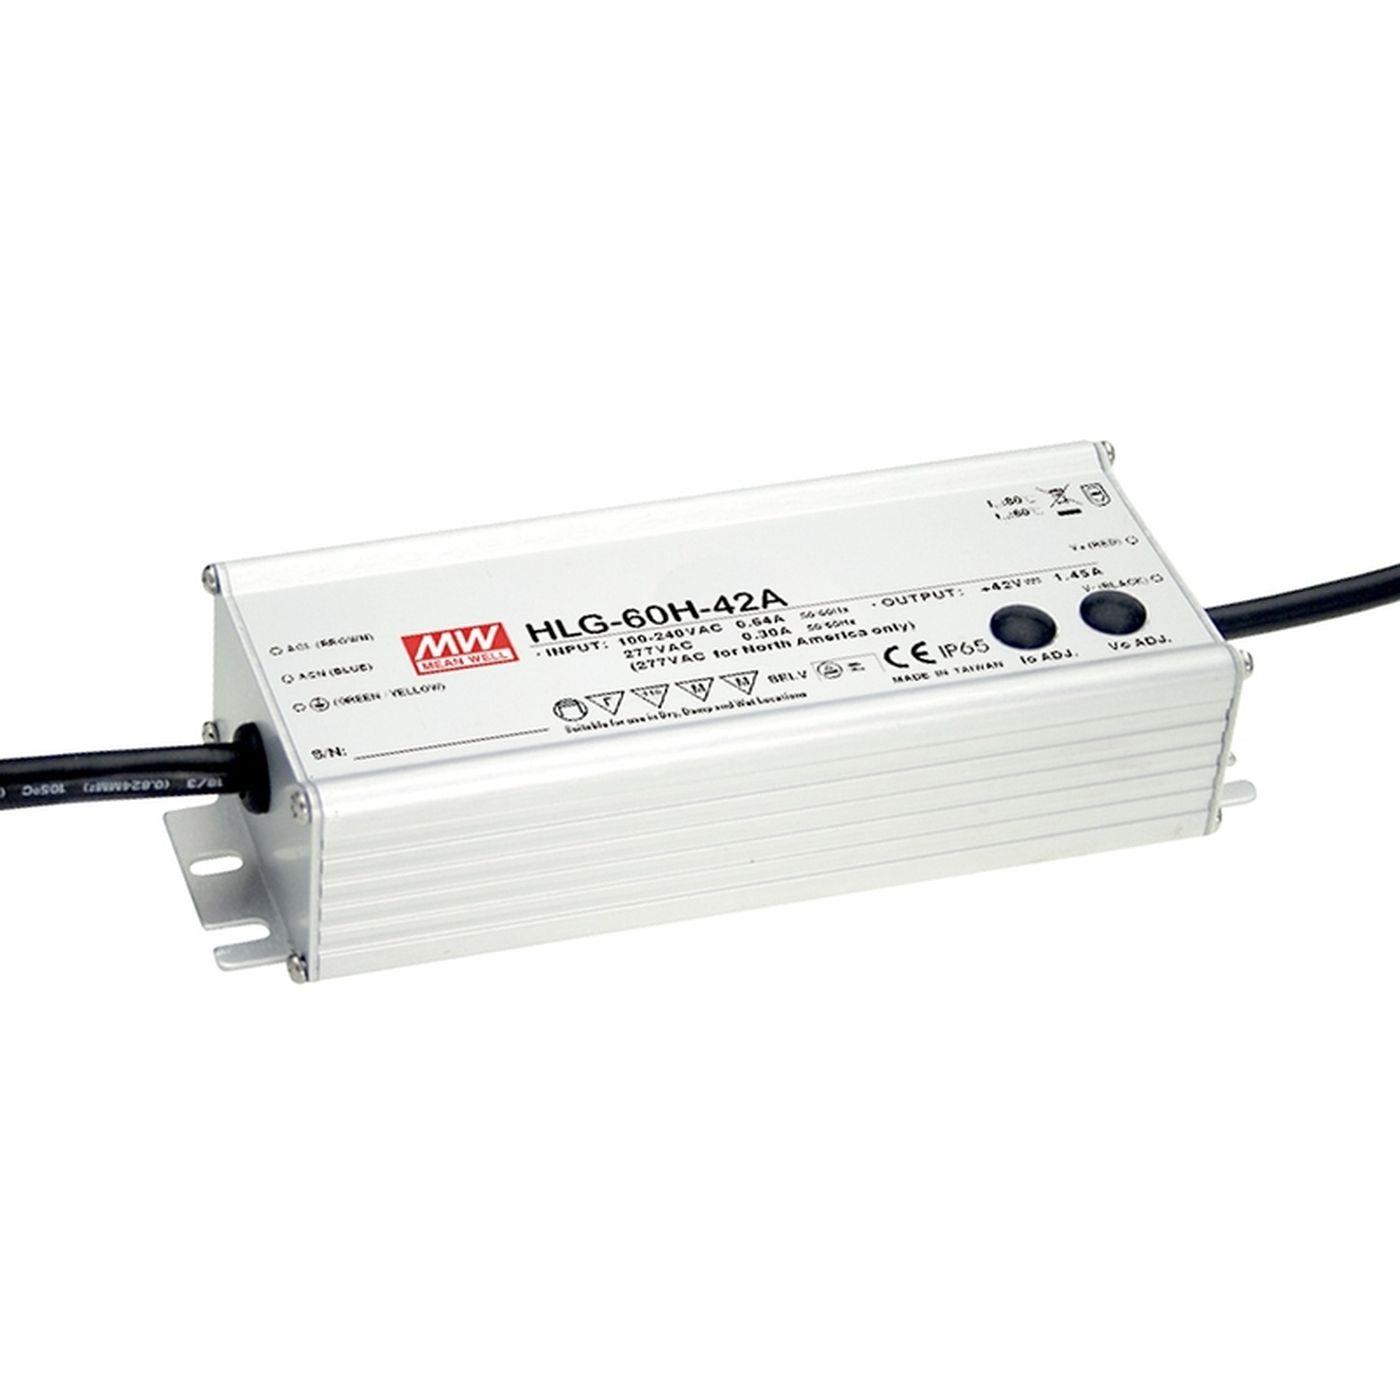 HLG-60H-48A 62W 48V 1,3A LED power supply Transformer Driver IP65